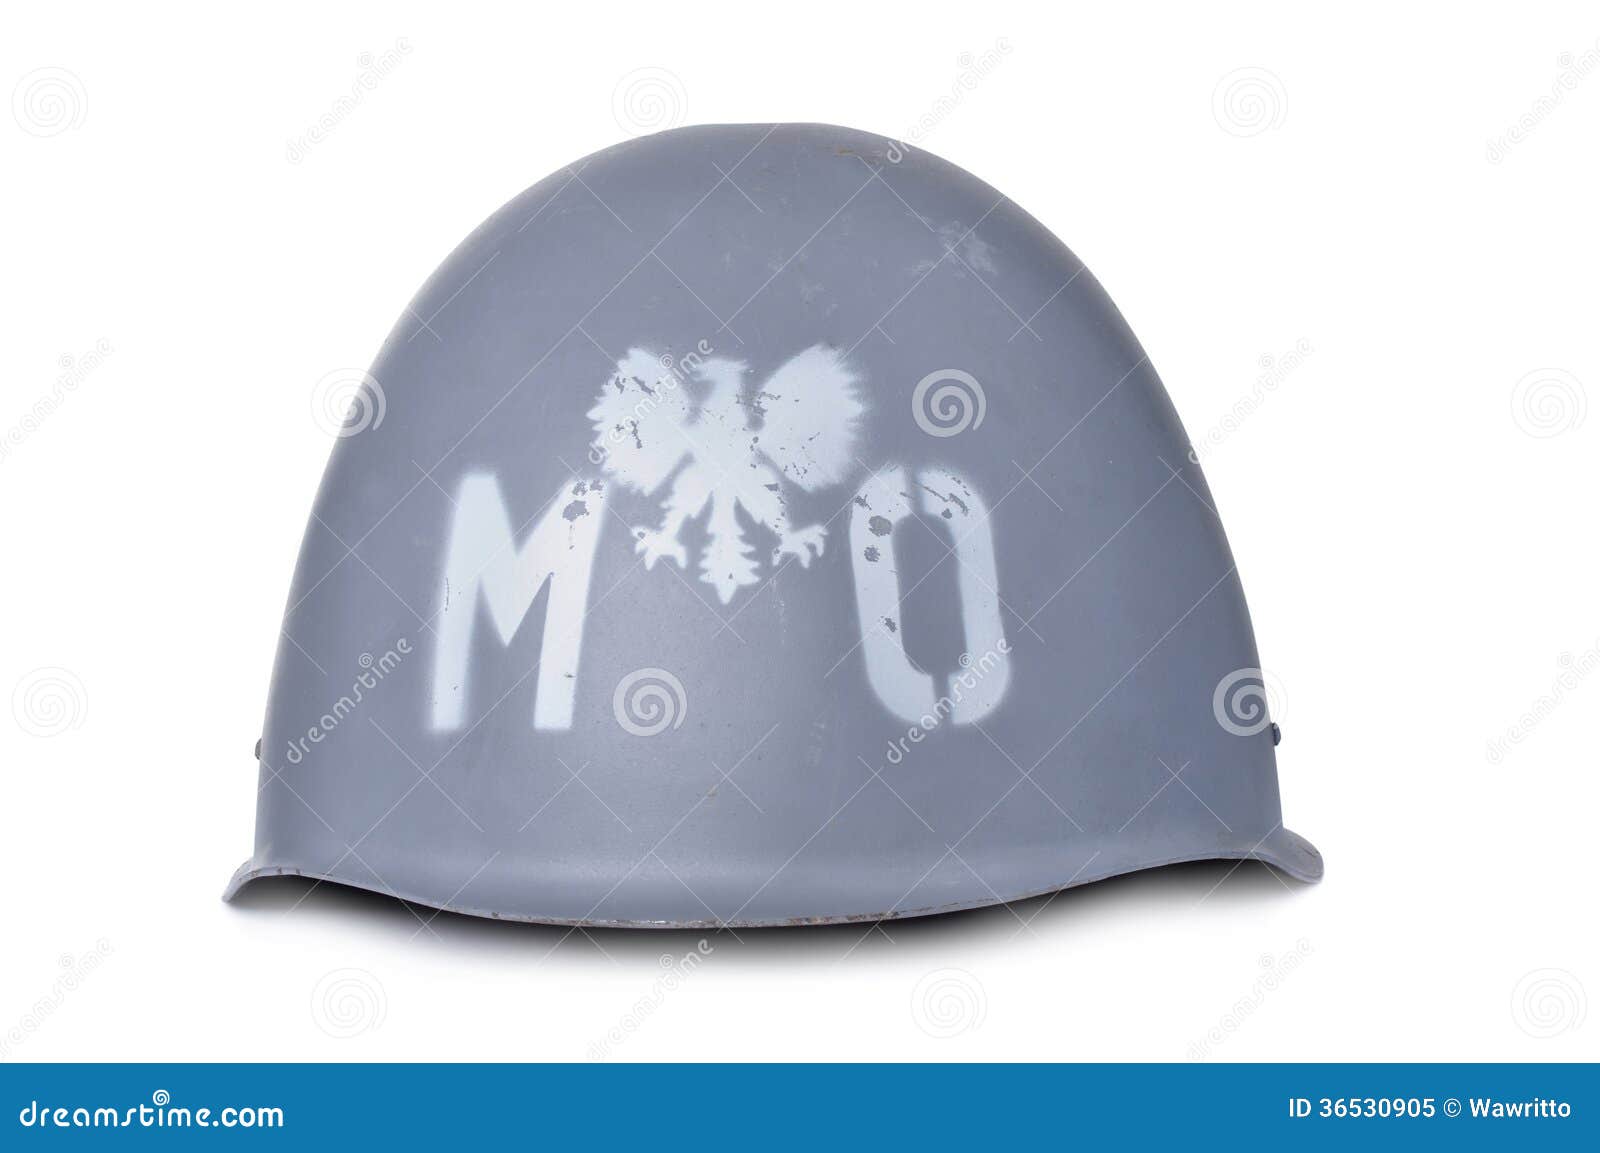 polish mo (citizens militia) helmet  on white